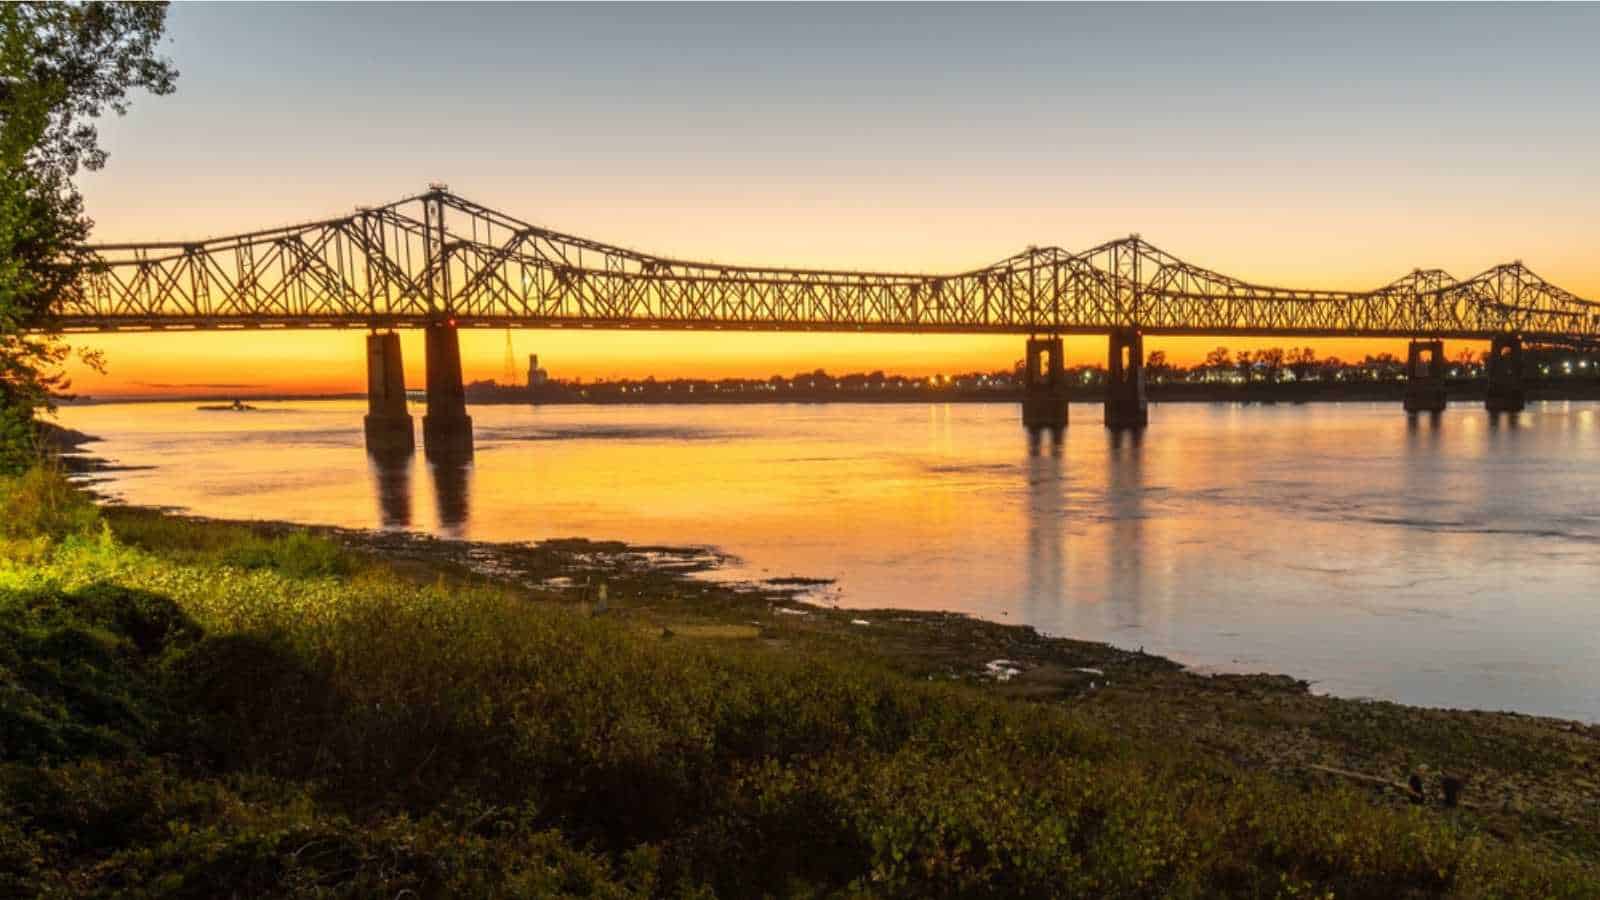 Sunset on the Mississippi River in Natchez, Mississippi with the Natchez Vidalia Bridge.
